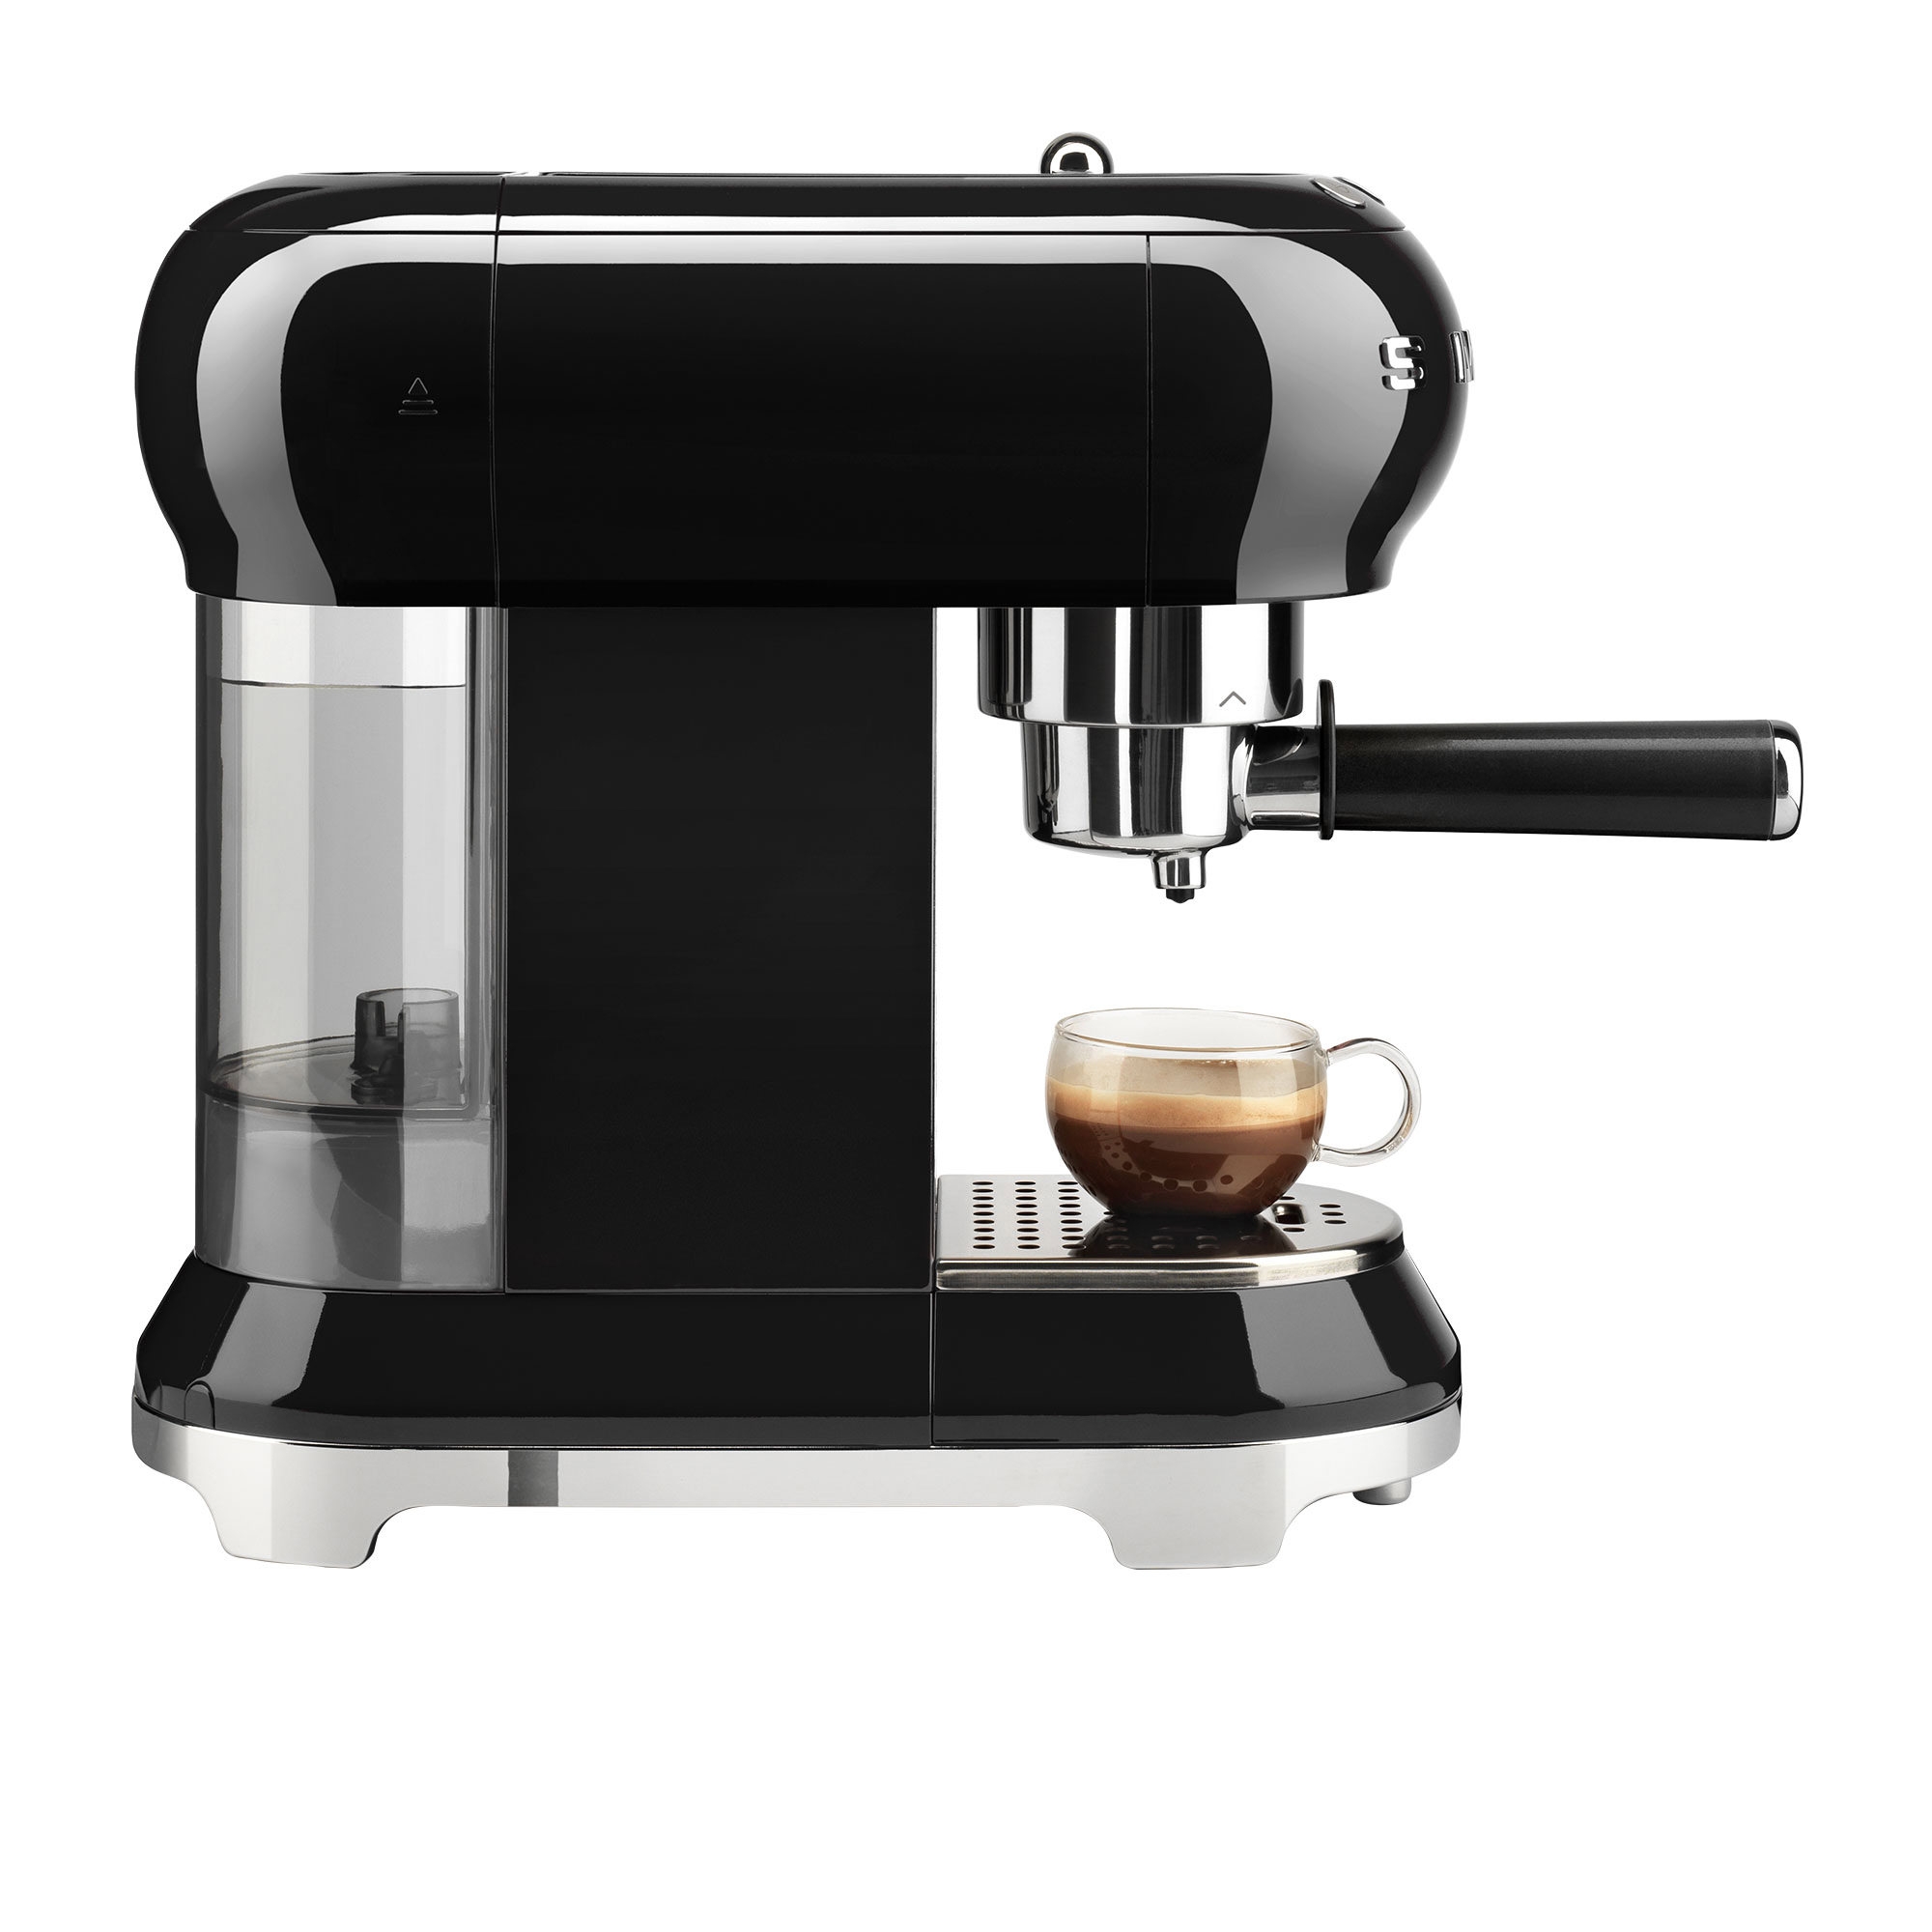 Smeg 50's Retro Style Espresso Coffee Machine Black Image 2